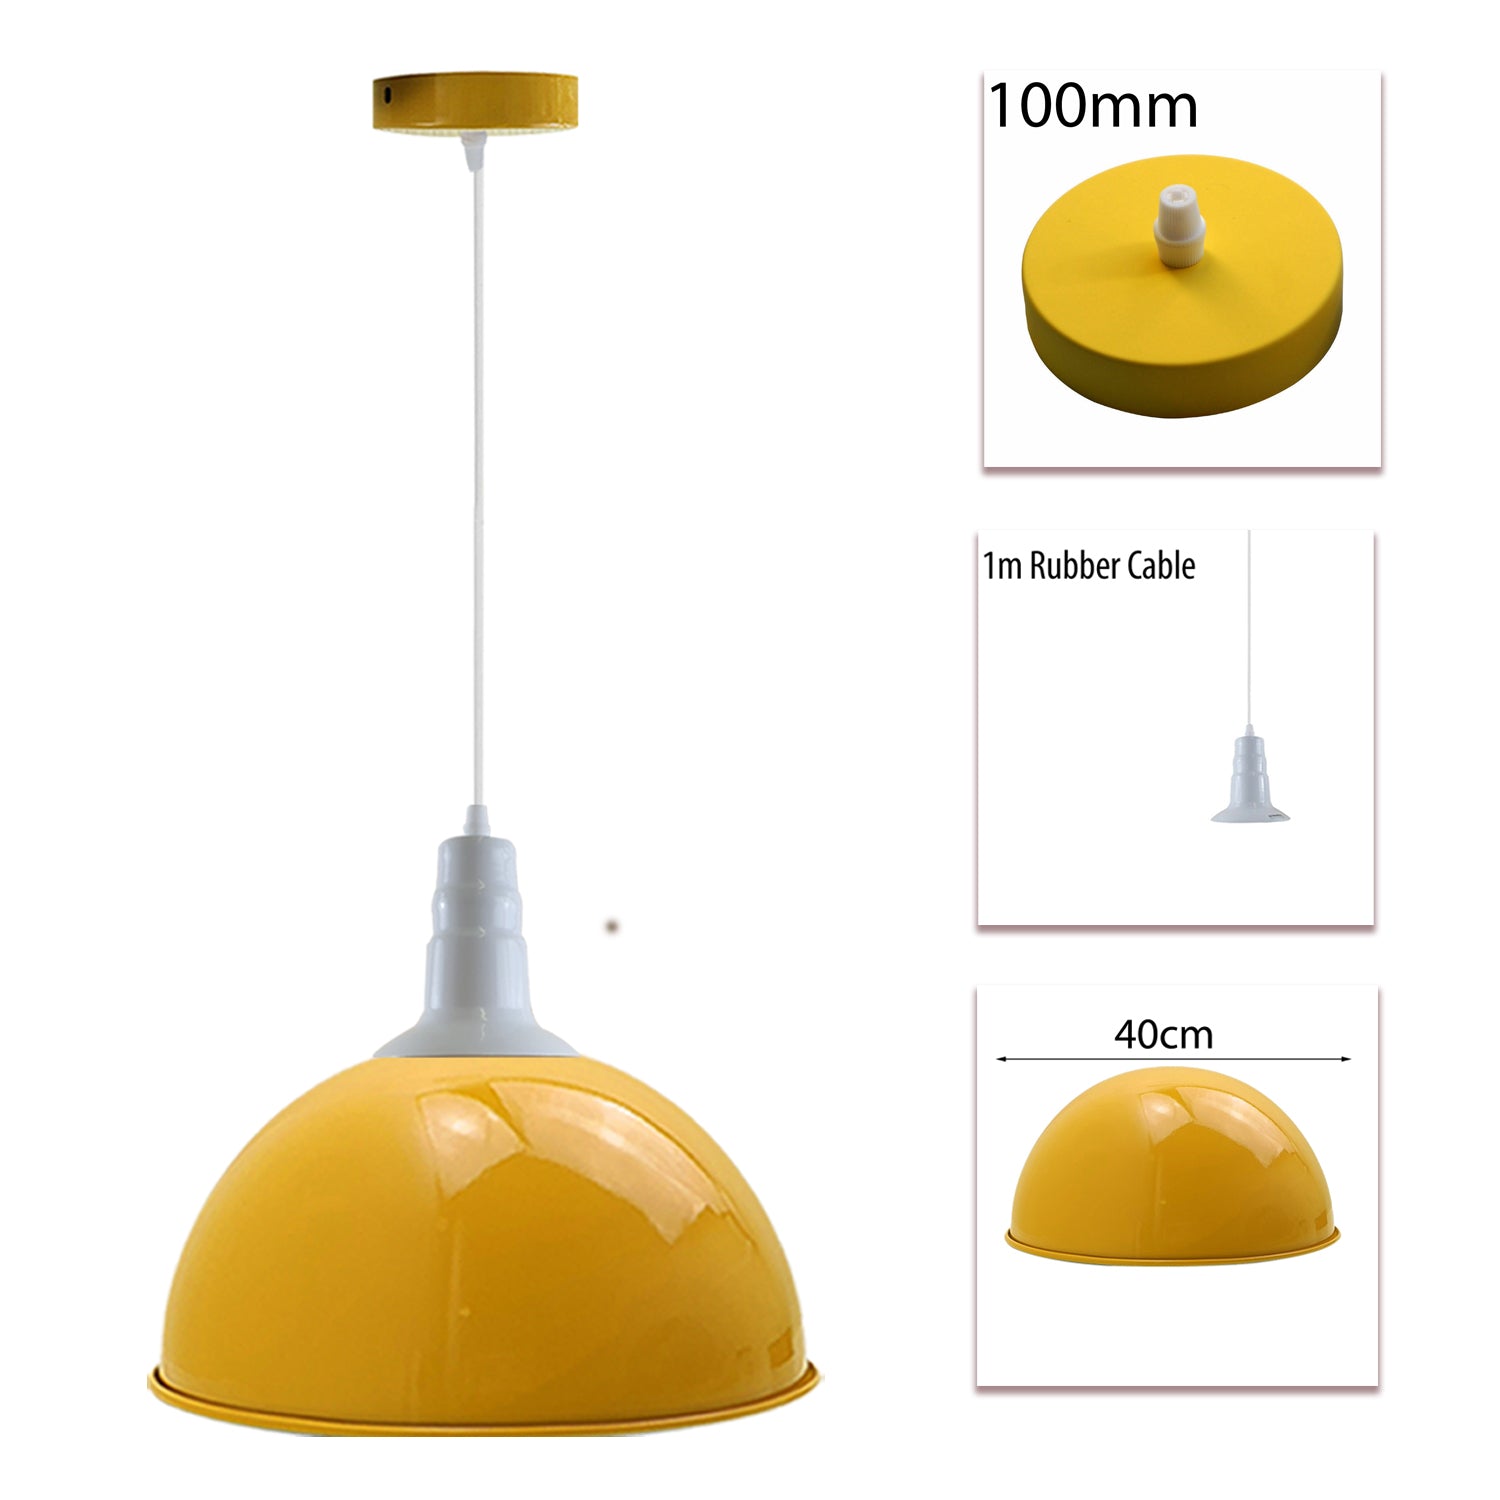 2 Pack Modern Vintage Industrial Retro Loft Metal Ceiling Lamp Shade Pendant Light~3575 - LEDSone UK Ltd